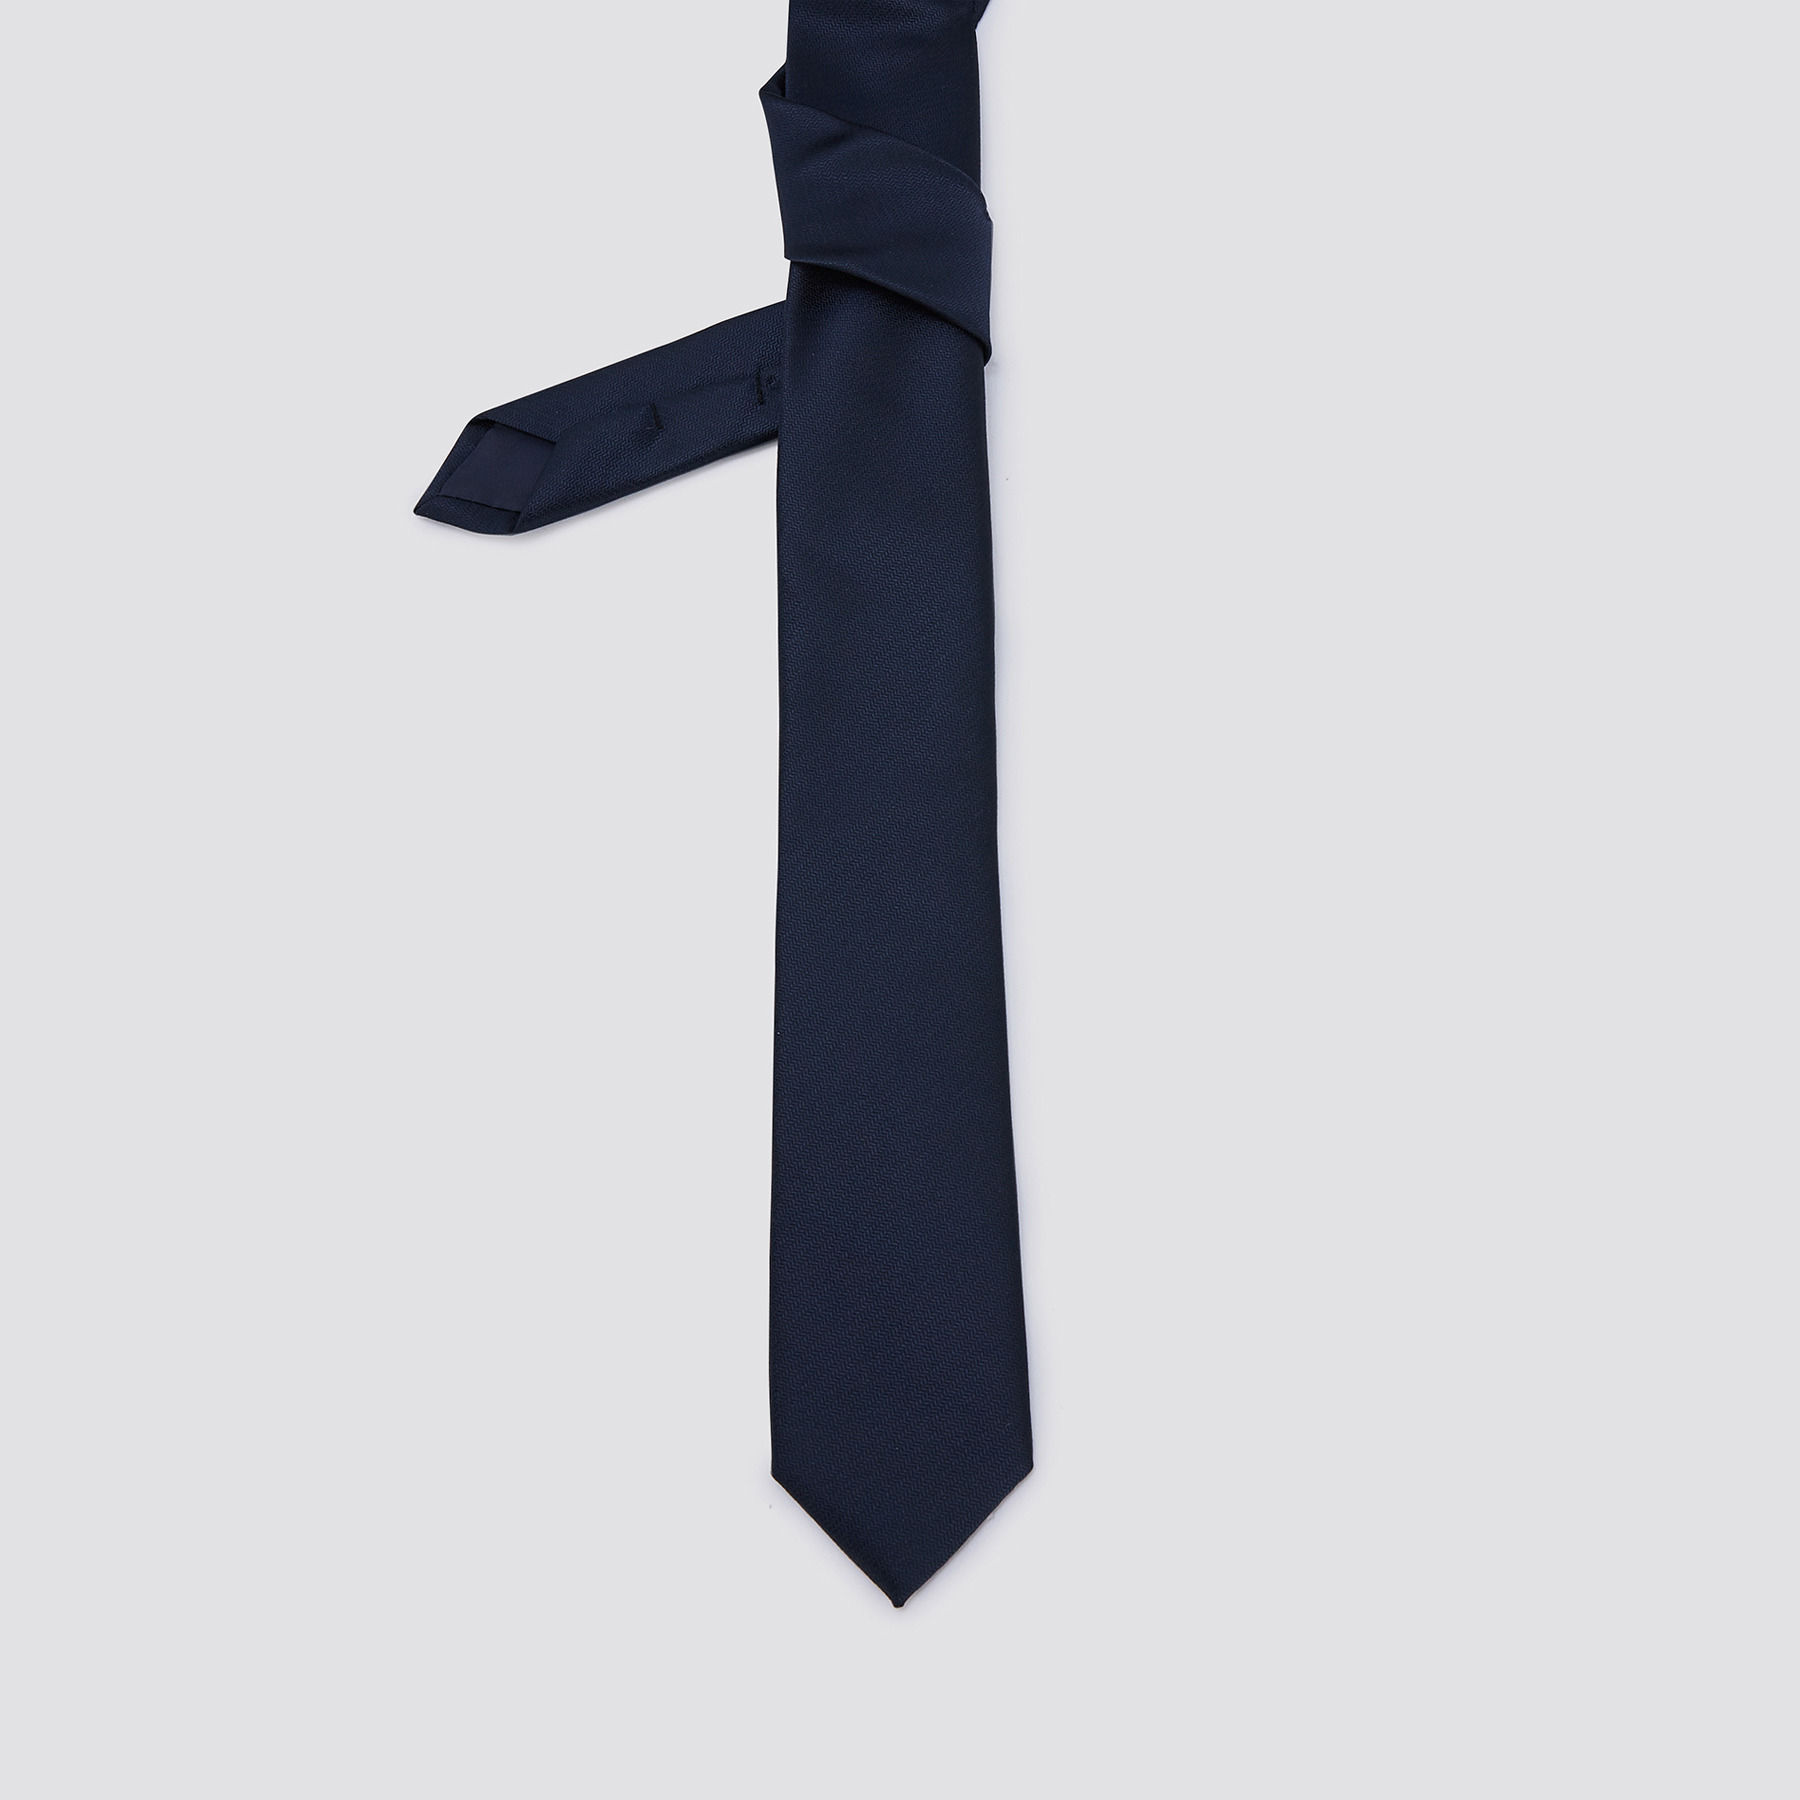 Cravate fine unie Bleu T.U. 100% Polyester Homme